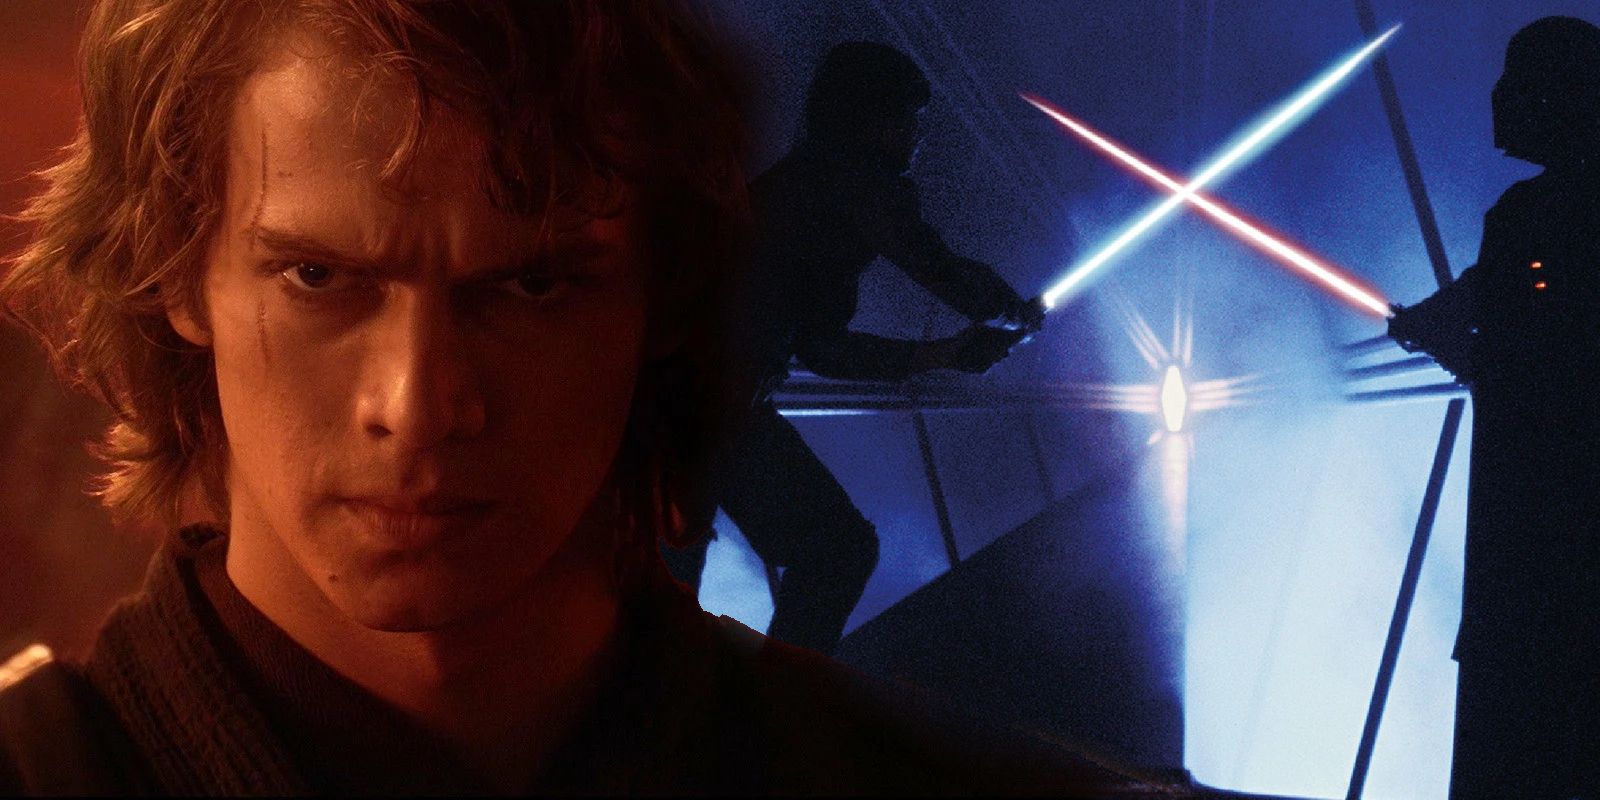 Anakin glowering on Mustafar; Luke vs. Vader in the Empire Strikes Back